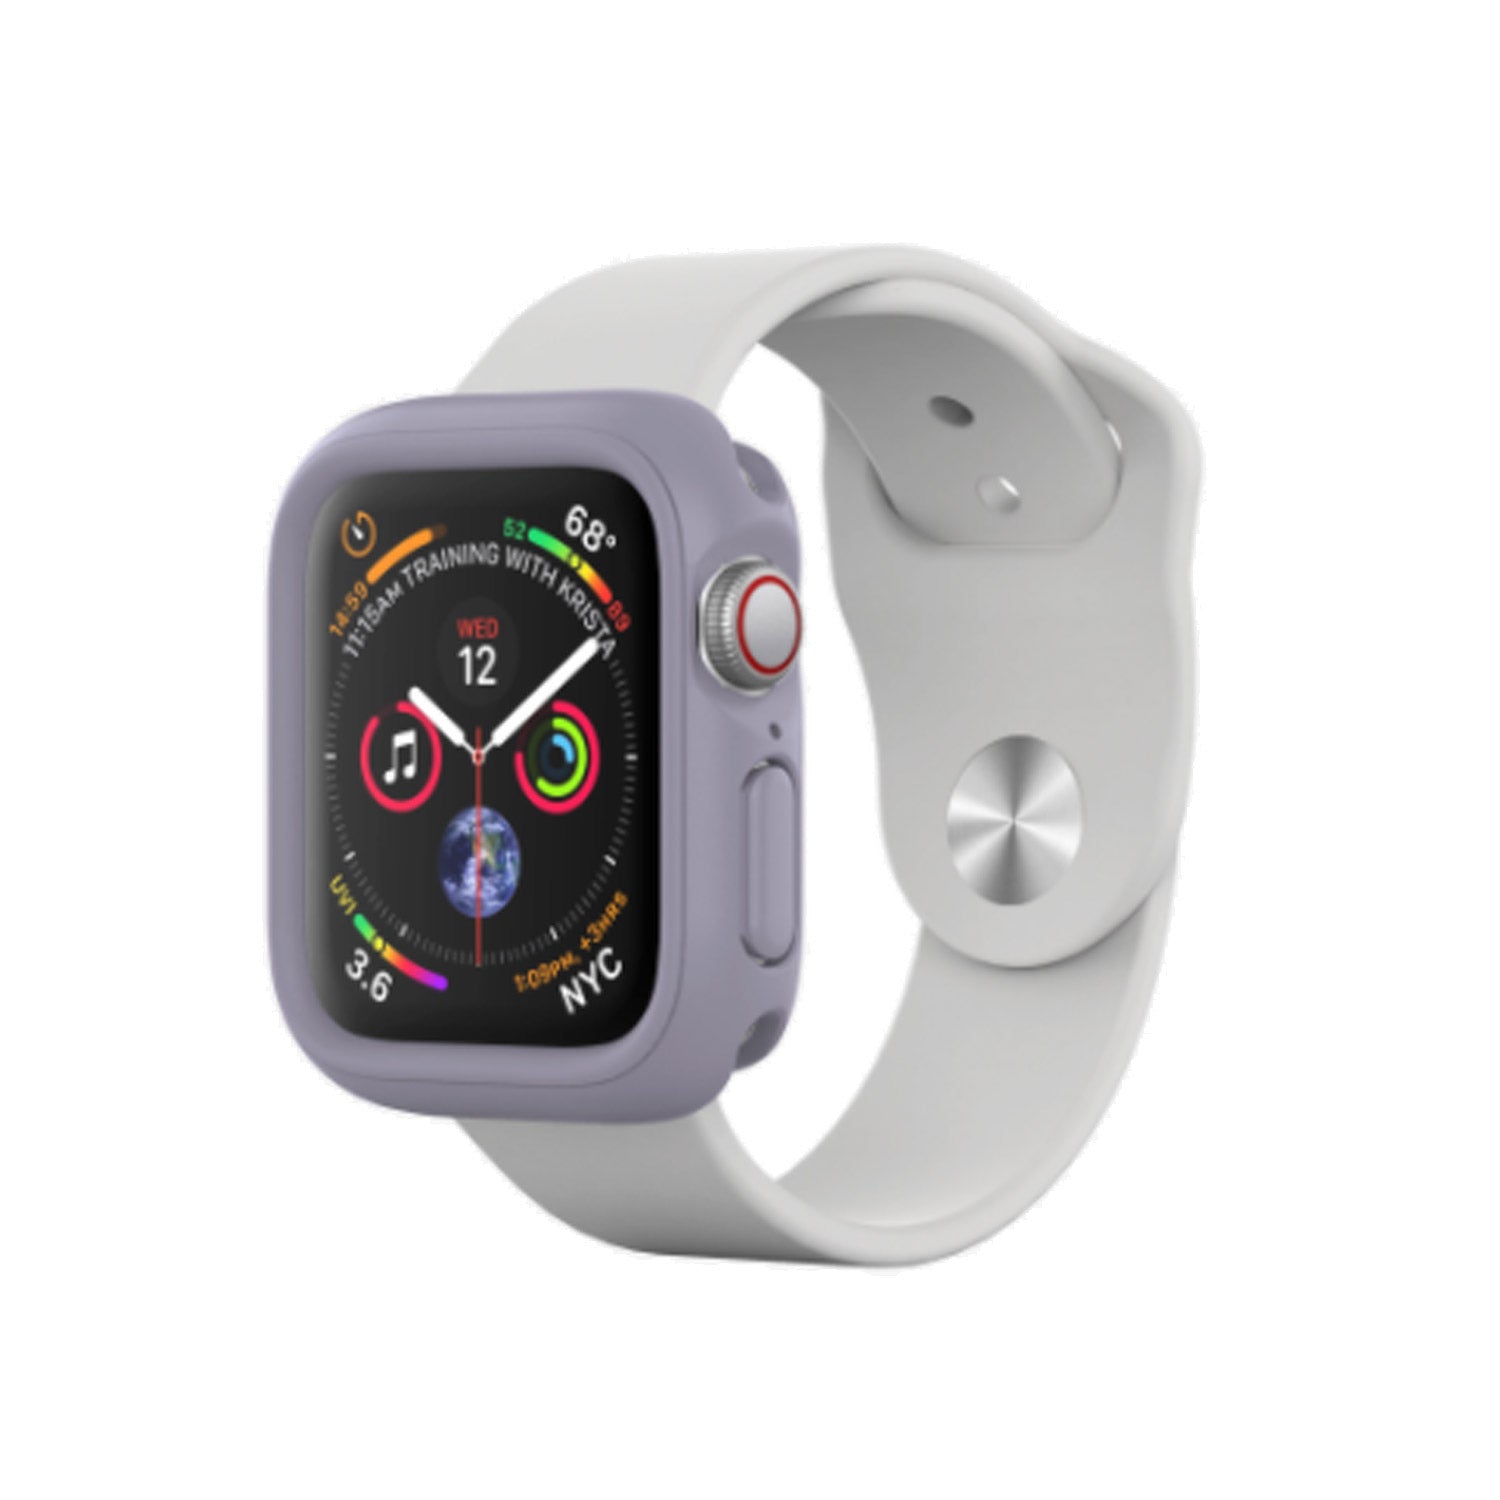 RhinoShield Apple Watch Series 1/2/3 CrashGuard NX Bumper Case 42mm Lavender